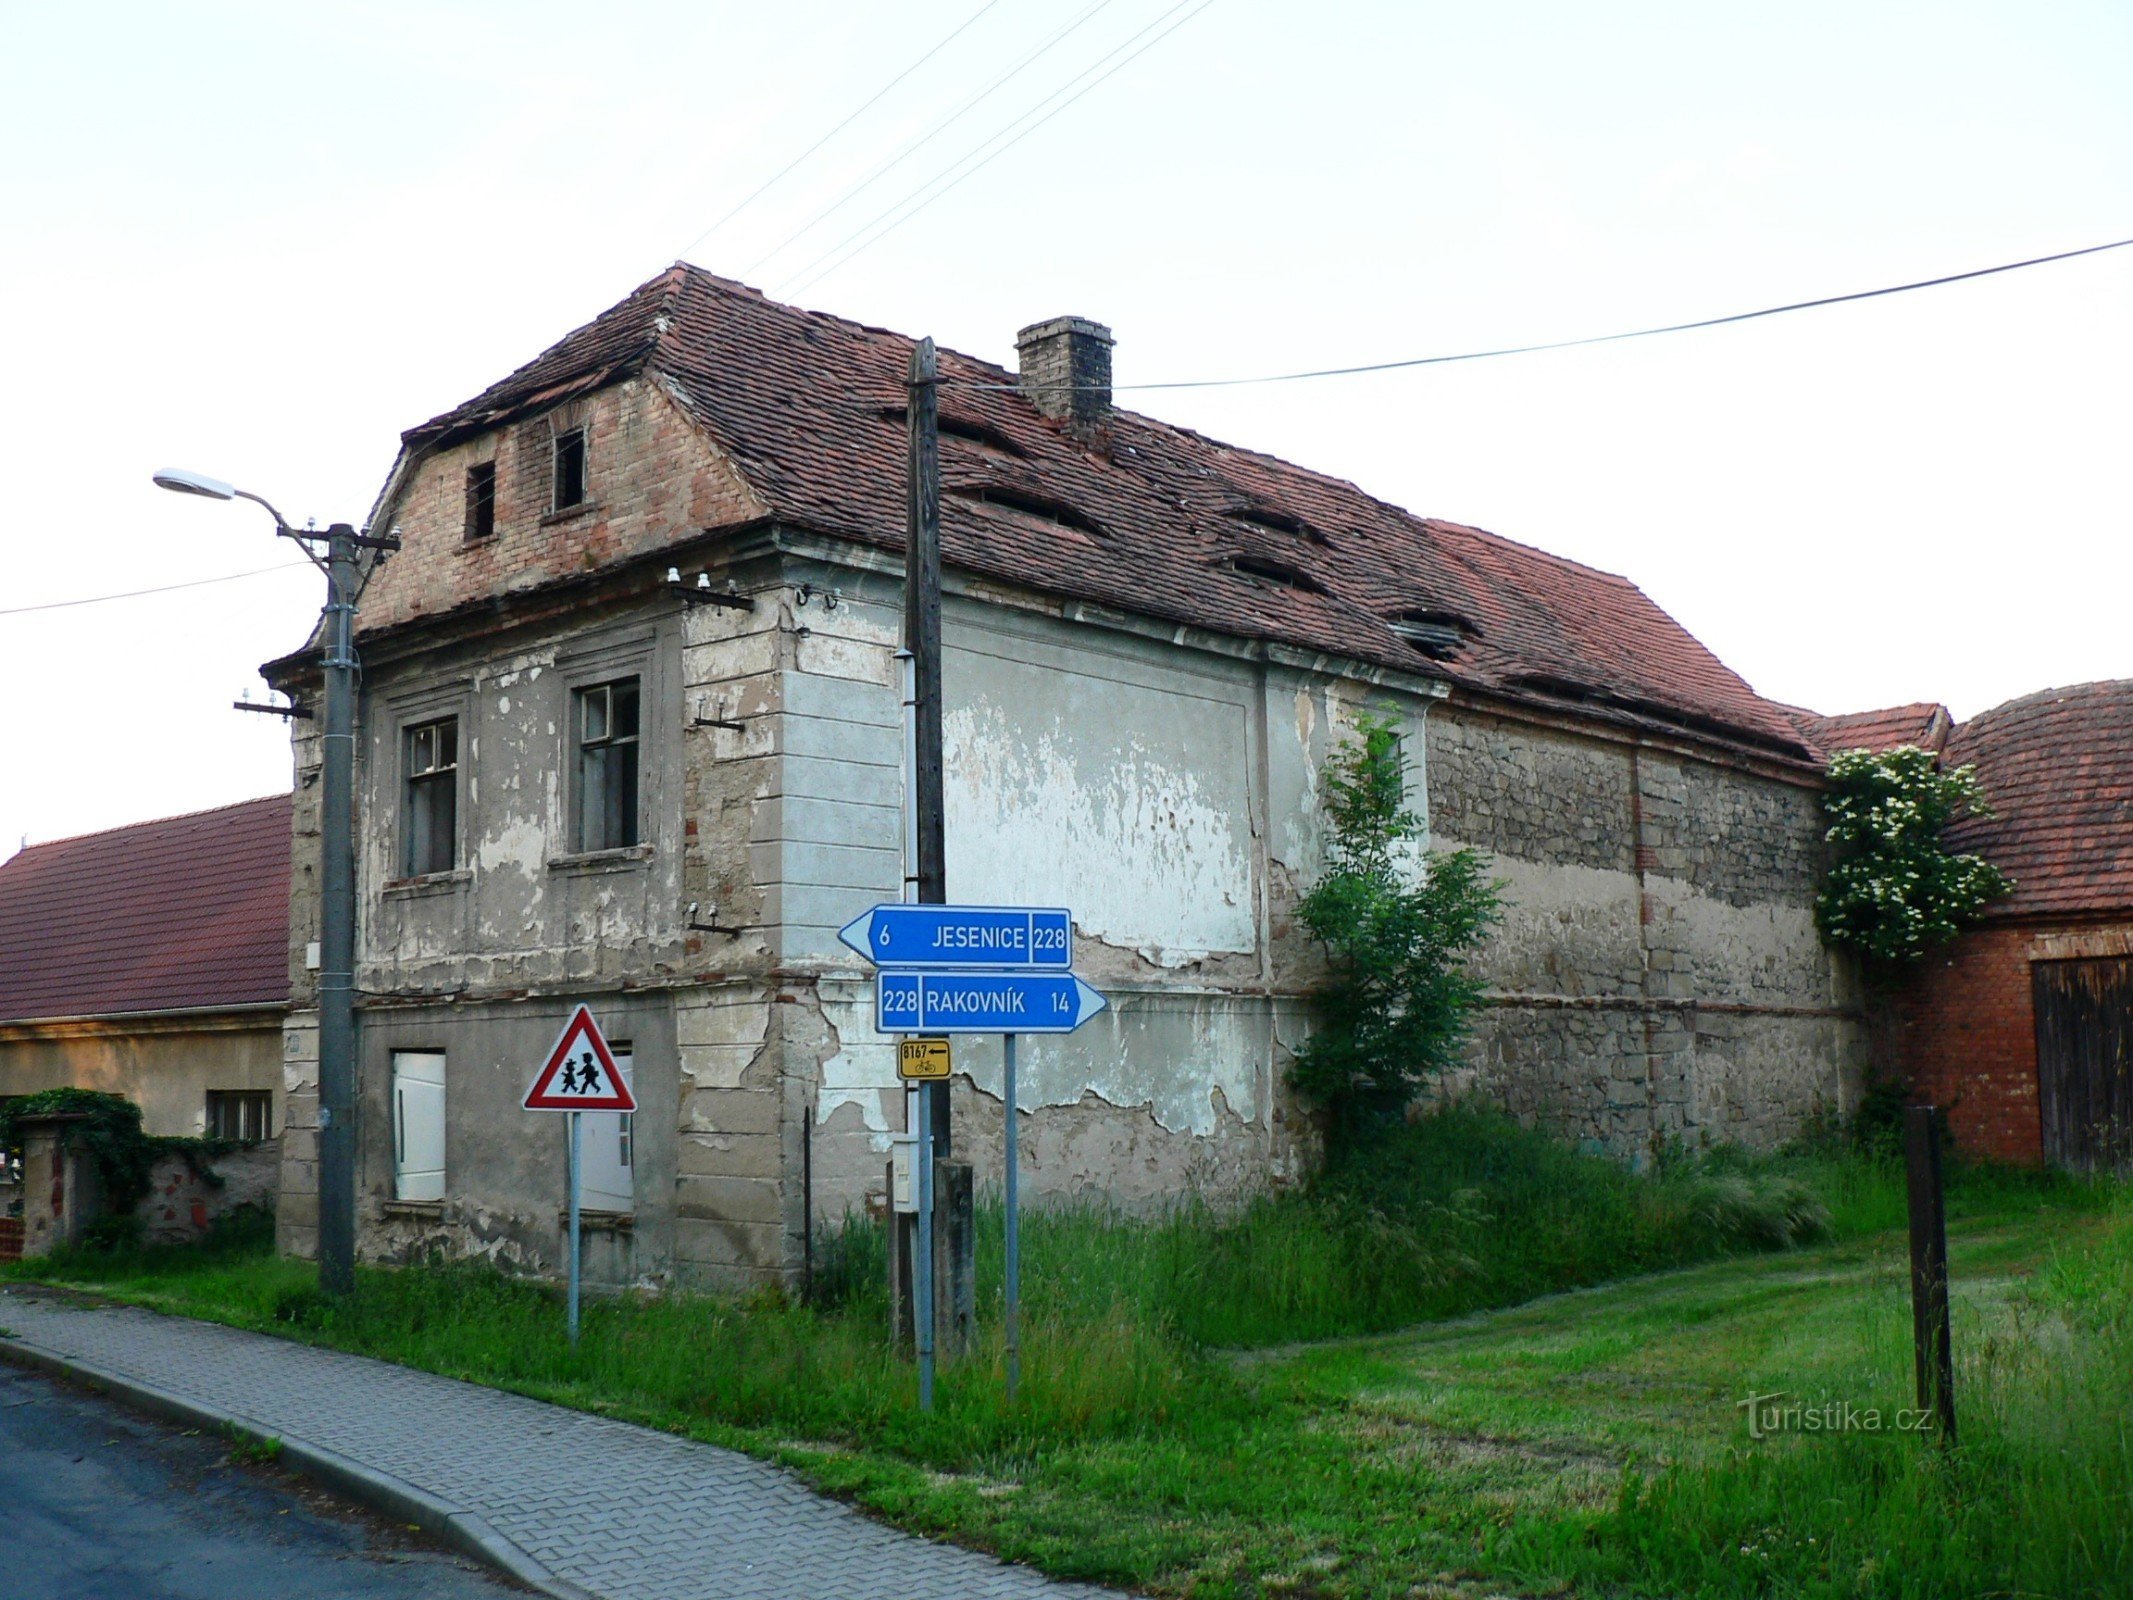 house after displaced Germans?